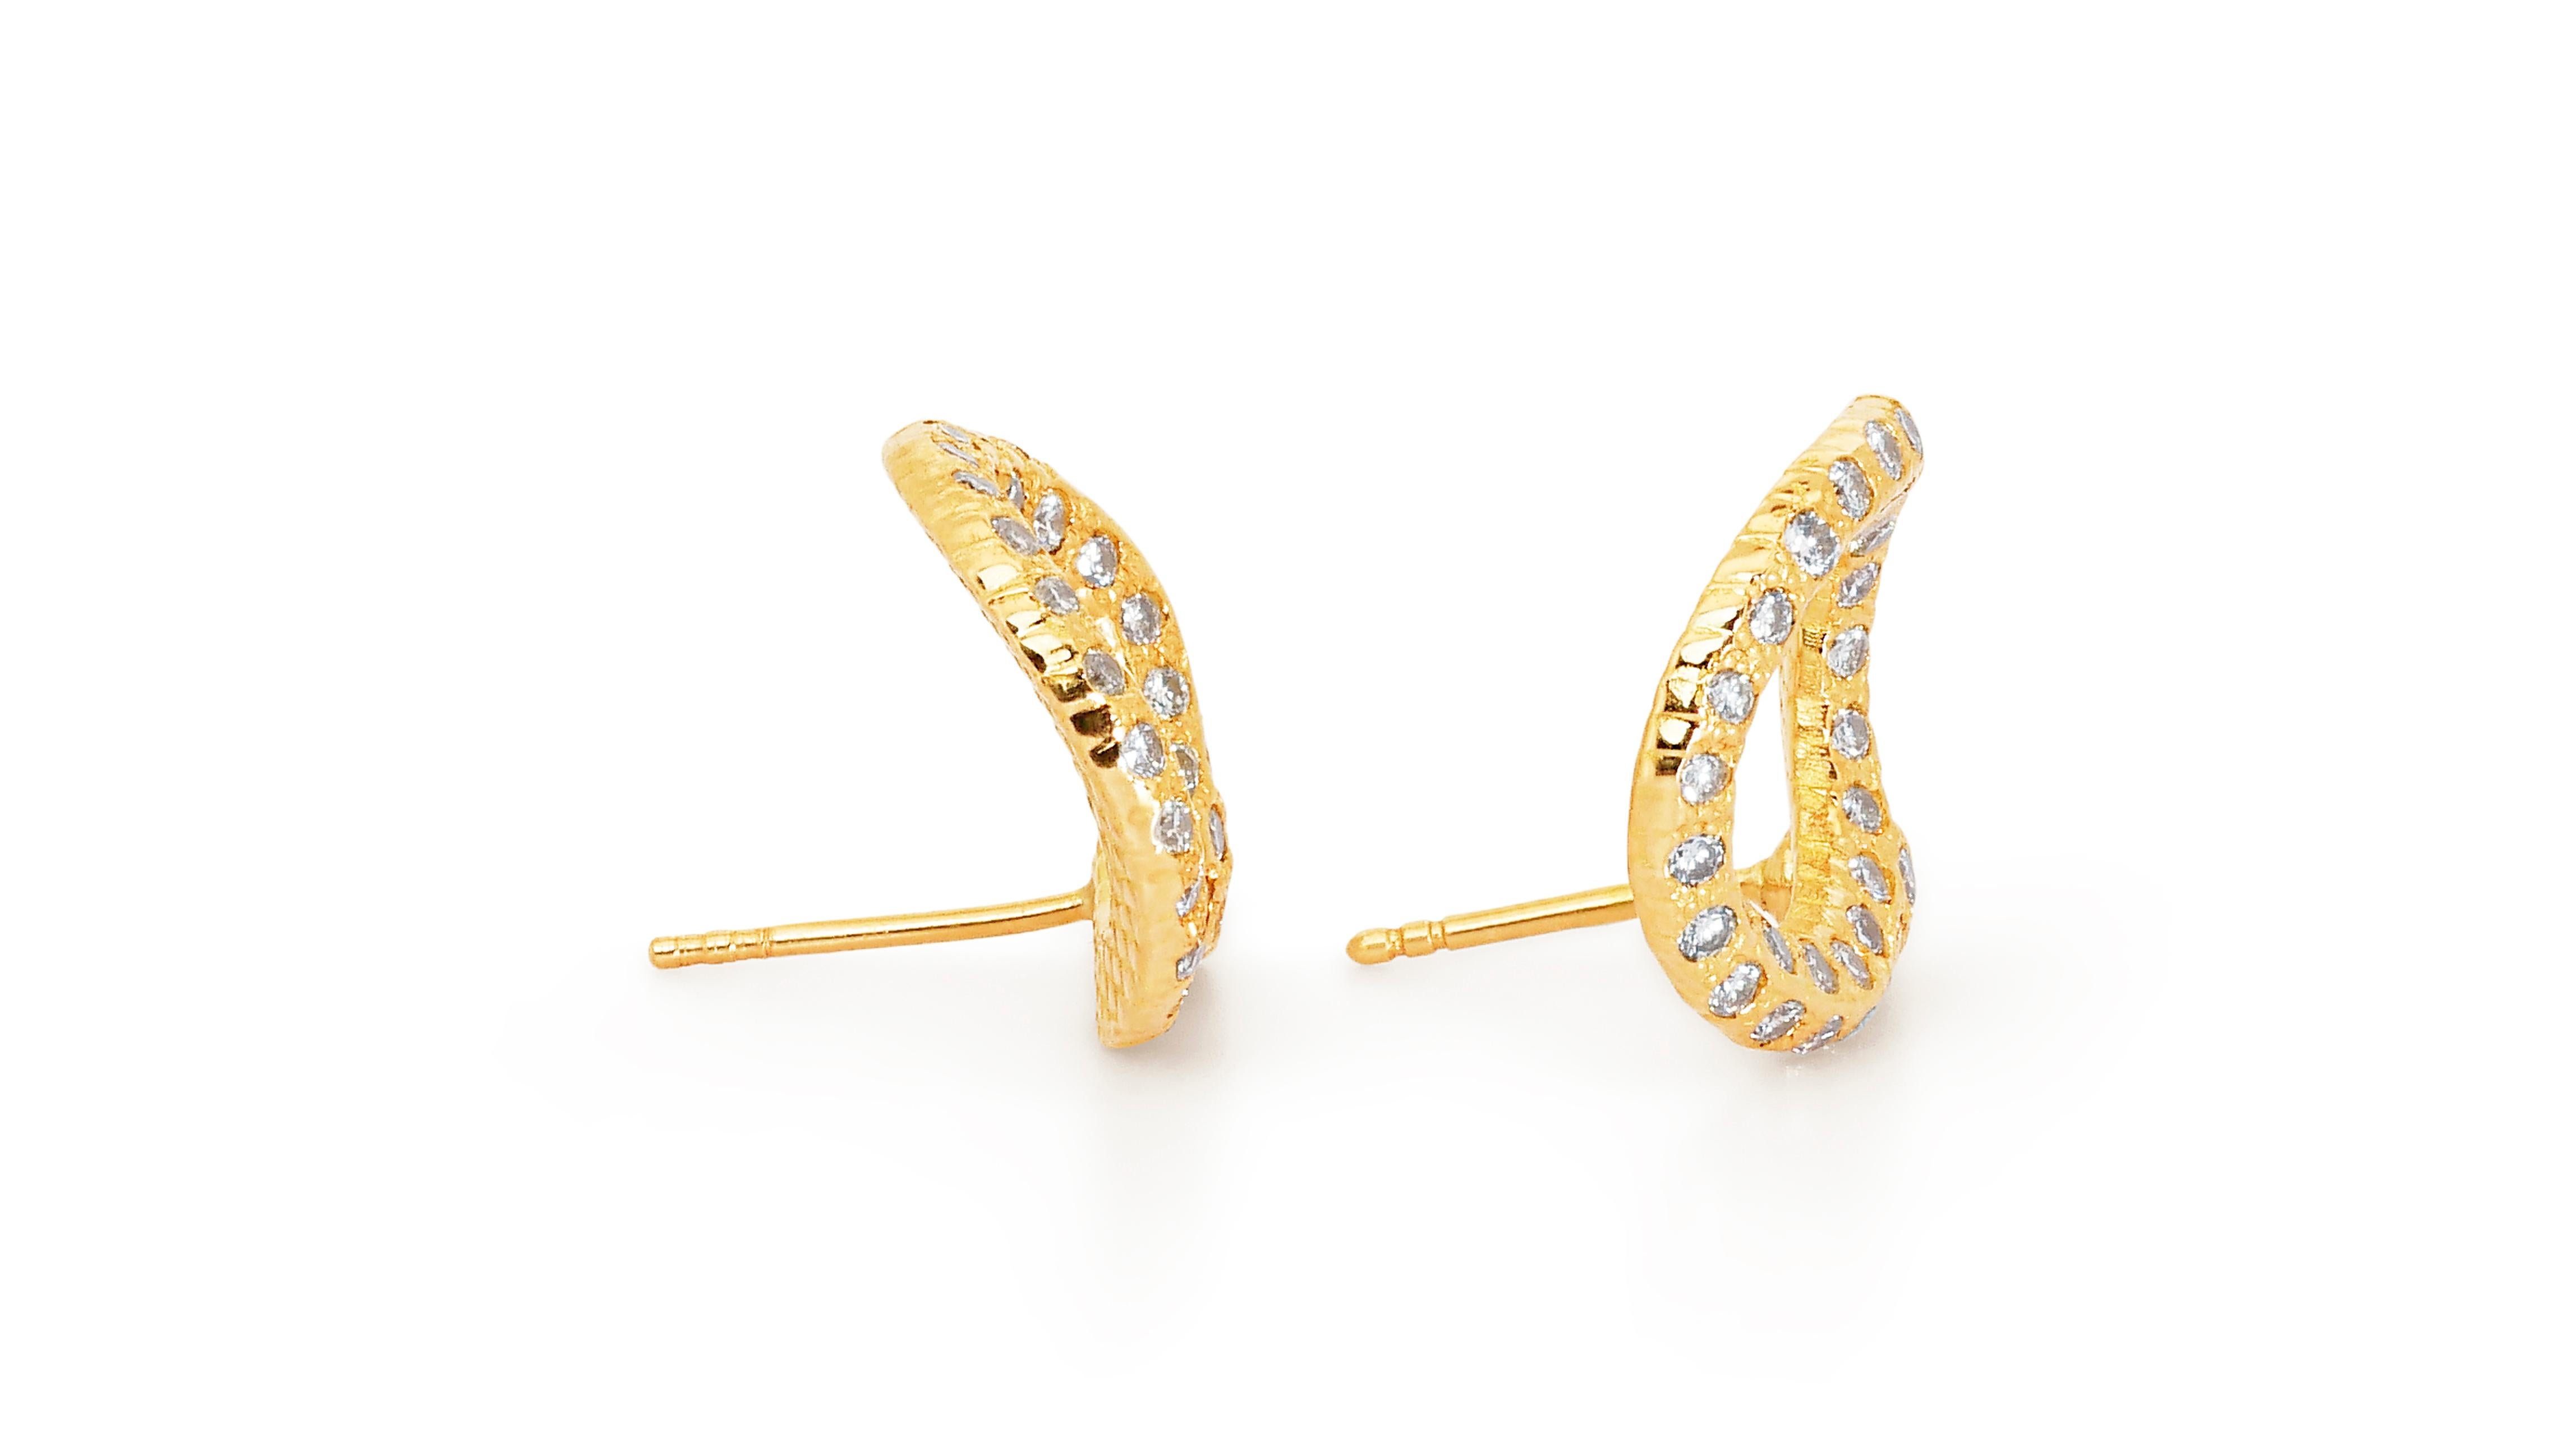 Glamorous 18k Yellow Gold Earrings w/ 1.28ct Natural Diamonds IGI Certificate For Sale 1